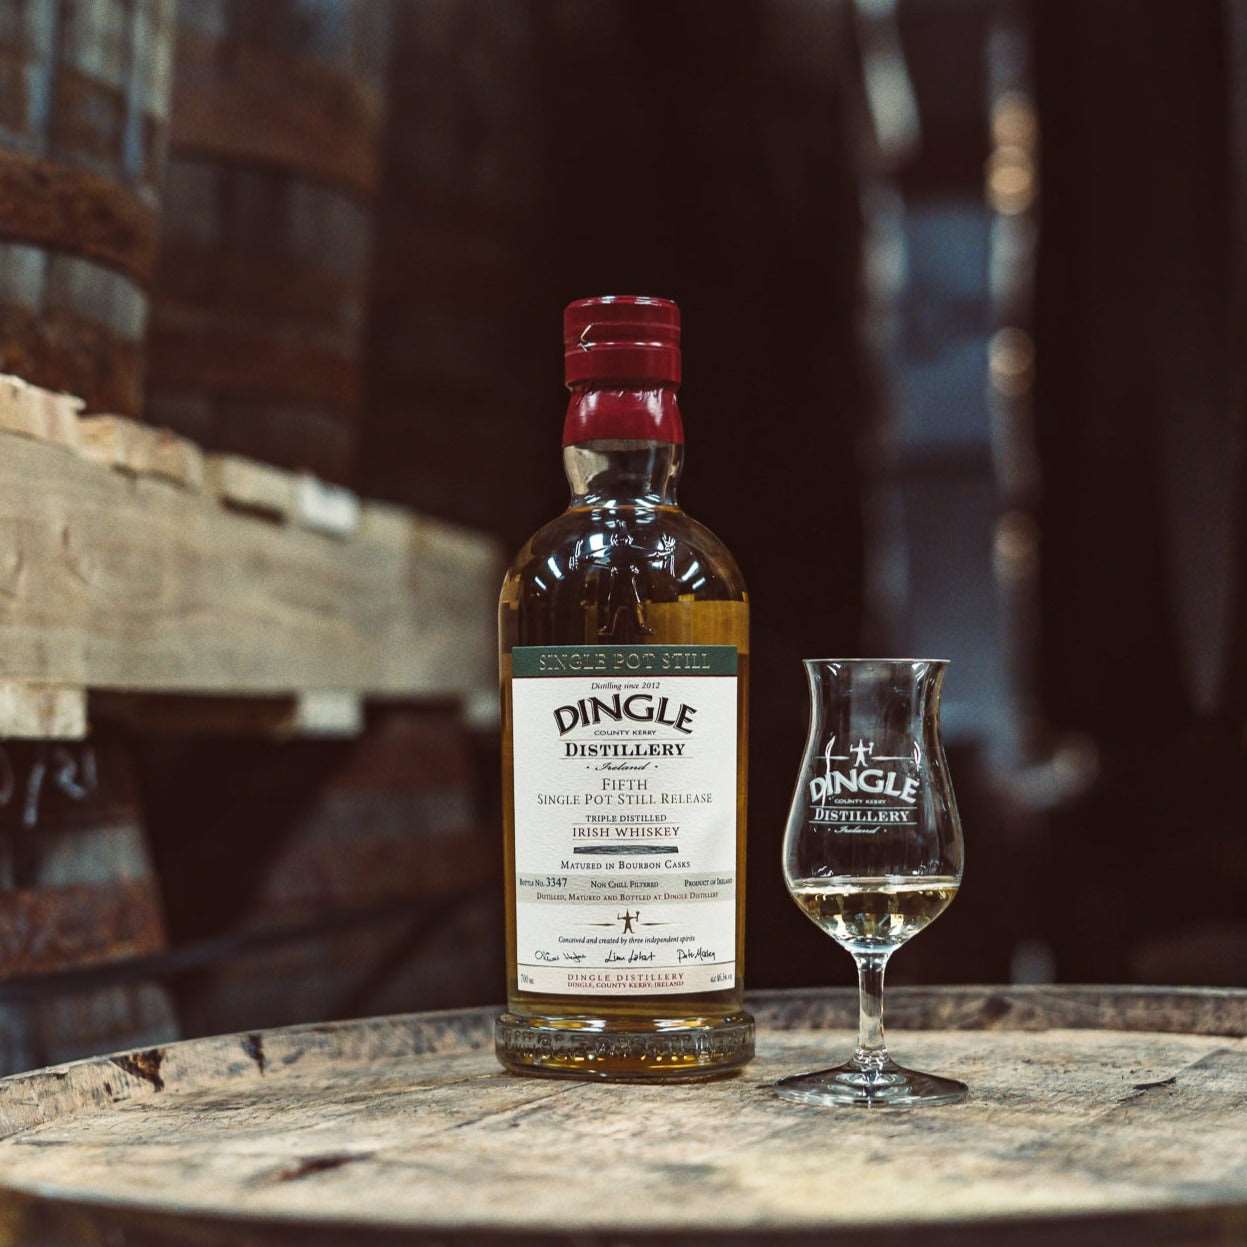 Dingle | Single Pot Still Release | Batch 5 | Tripple Distilled | Irish Whiskey | 0,7l | 46,5%GET A BOTTLE